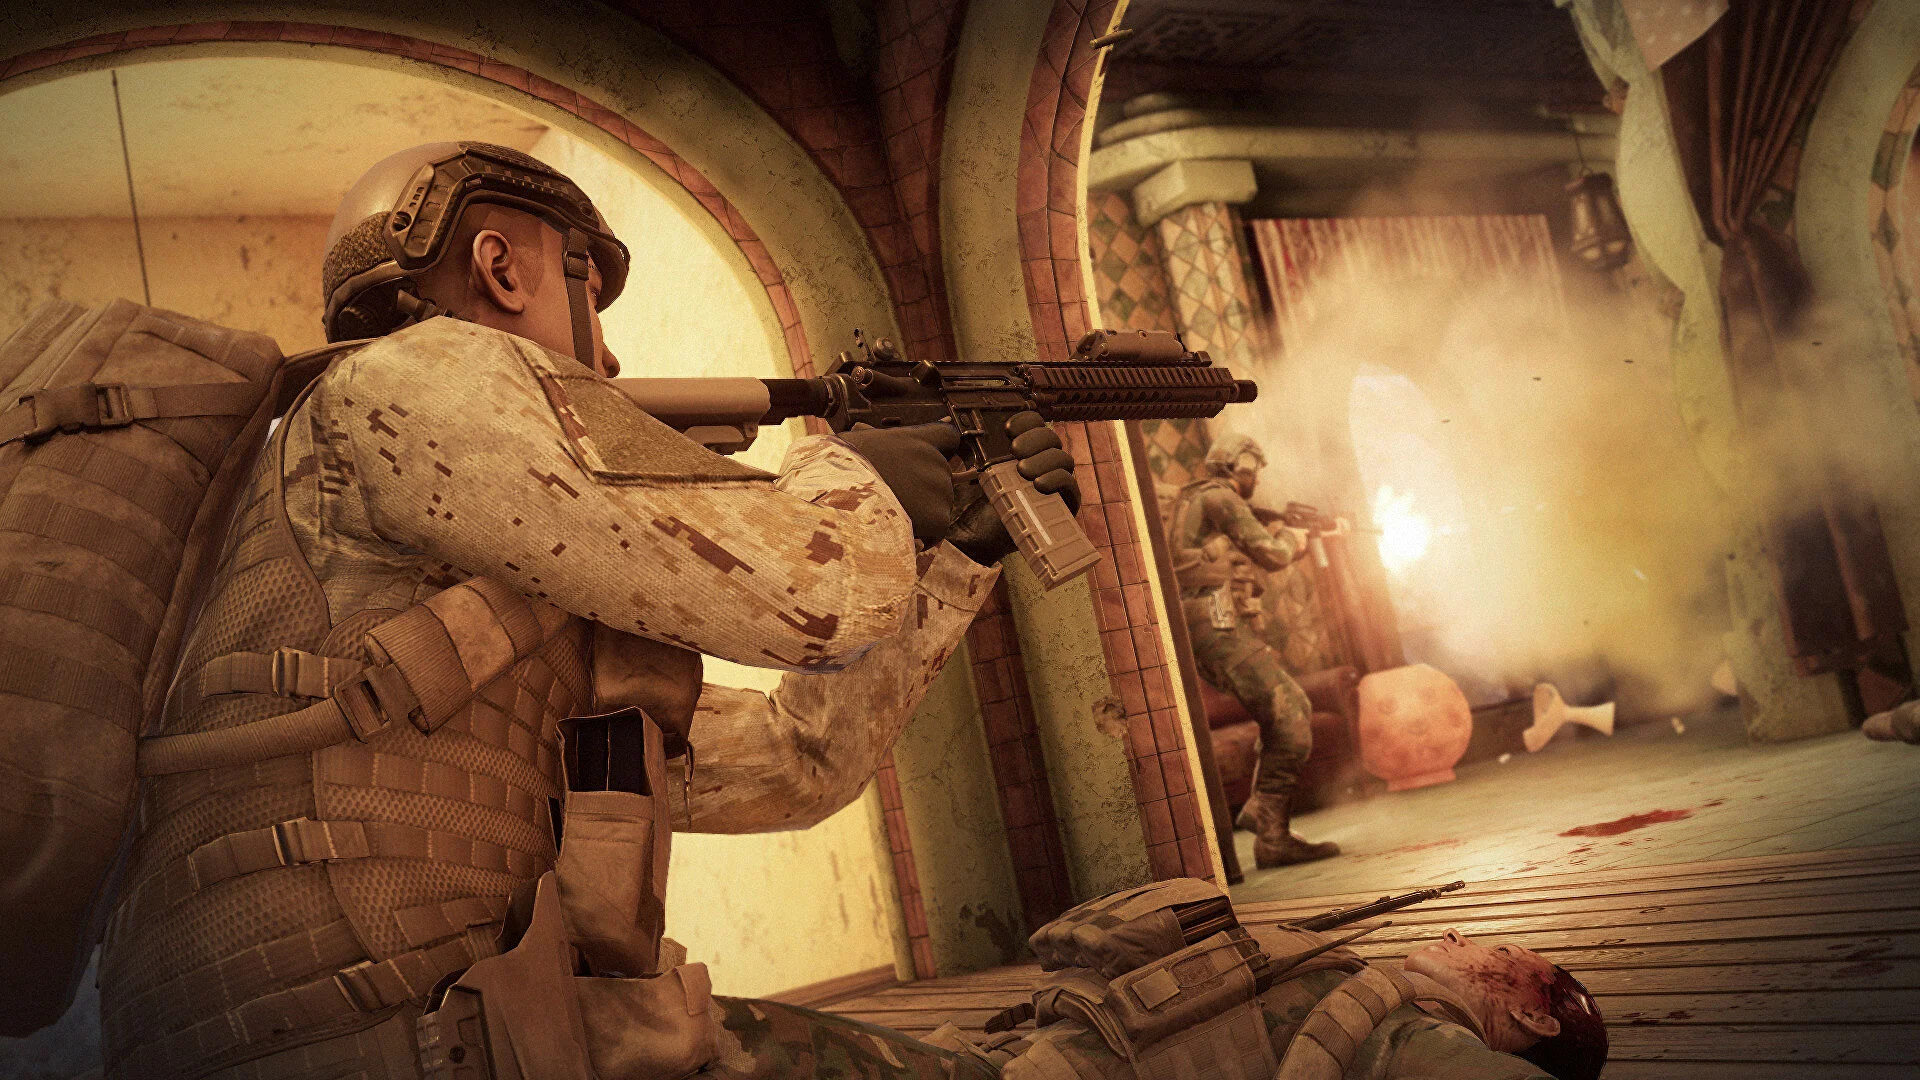 25 Games Like Modern Warfare 2 To Play in 2023